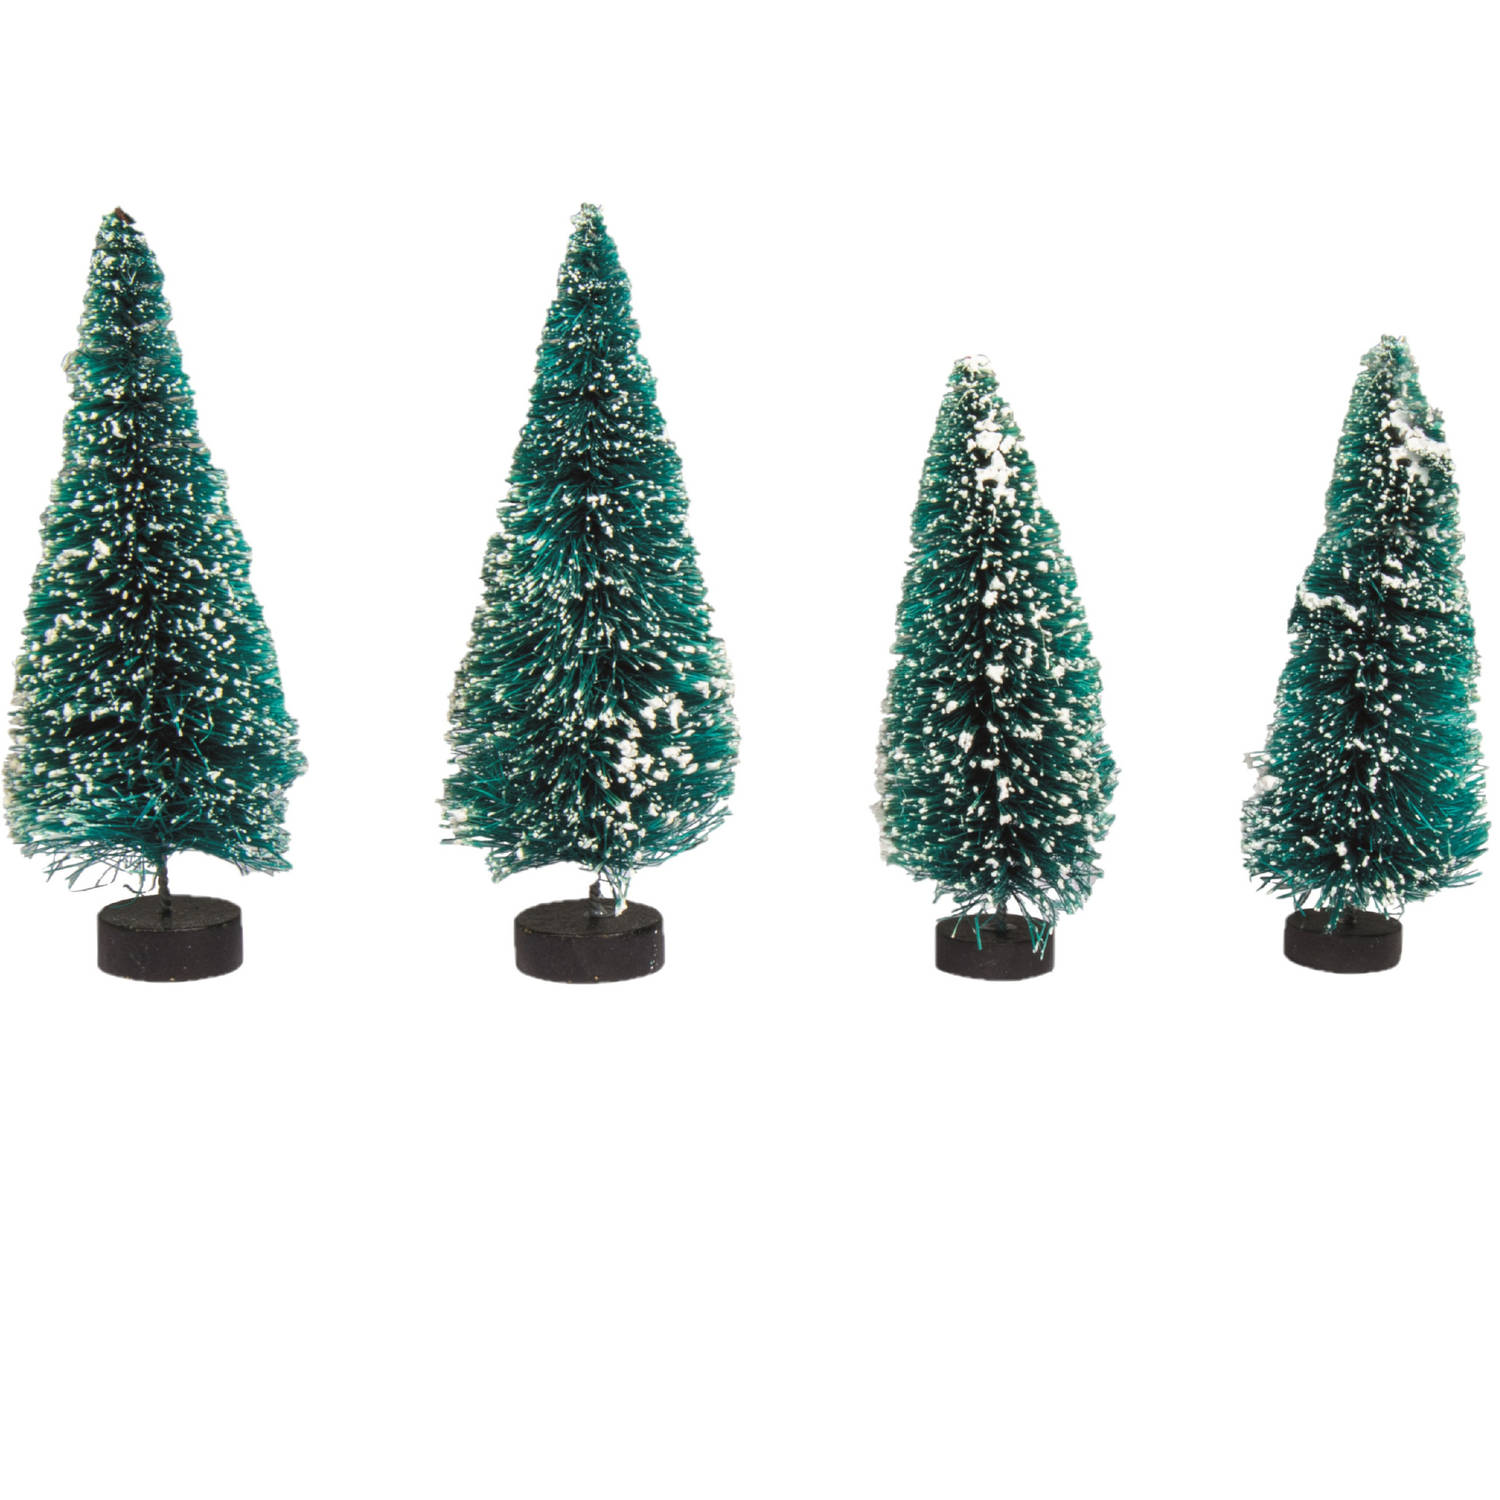 Rayher hobby kerstdorp miniatuur boompjes 4x stuks 9 en 12 cm Kerstdorpen